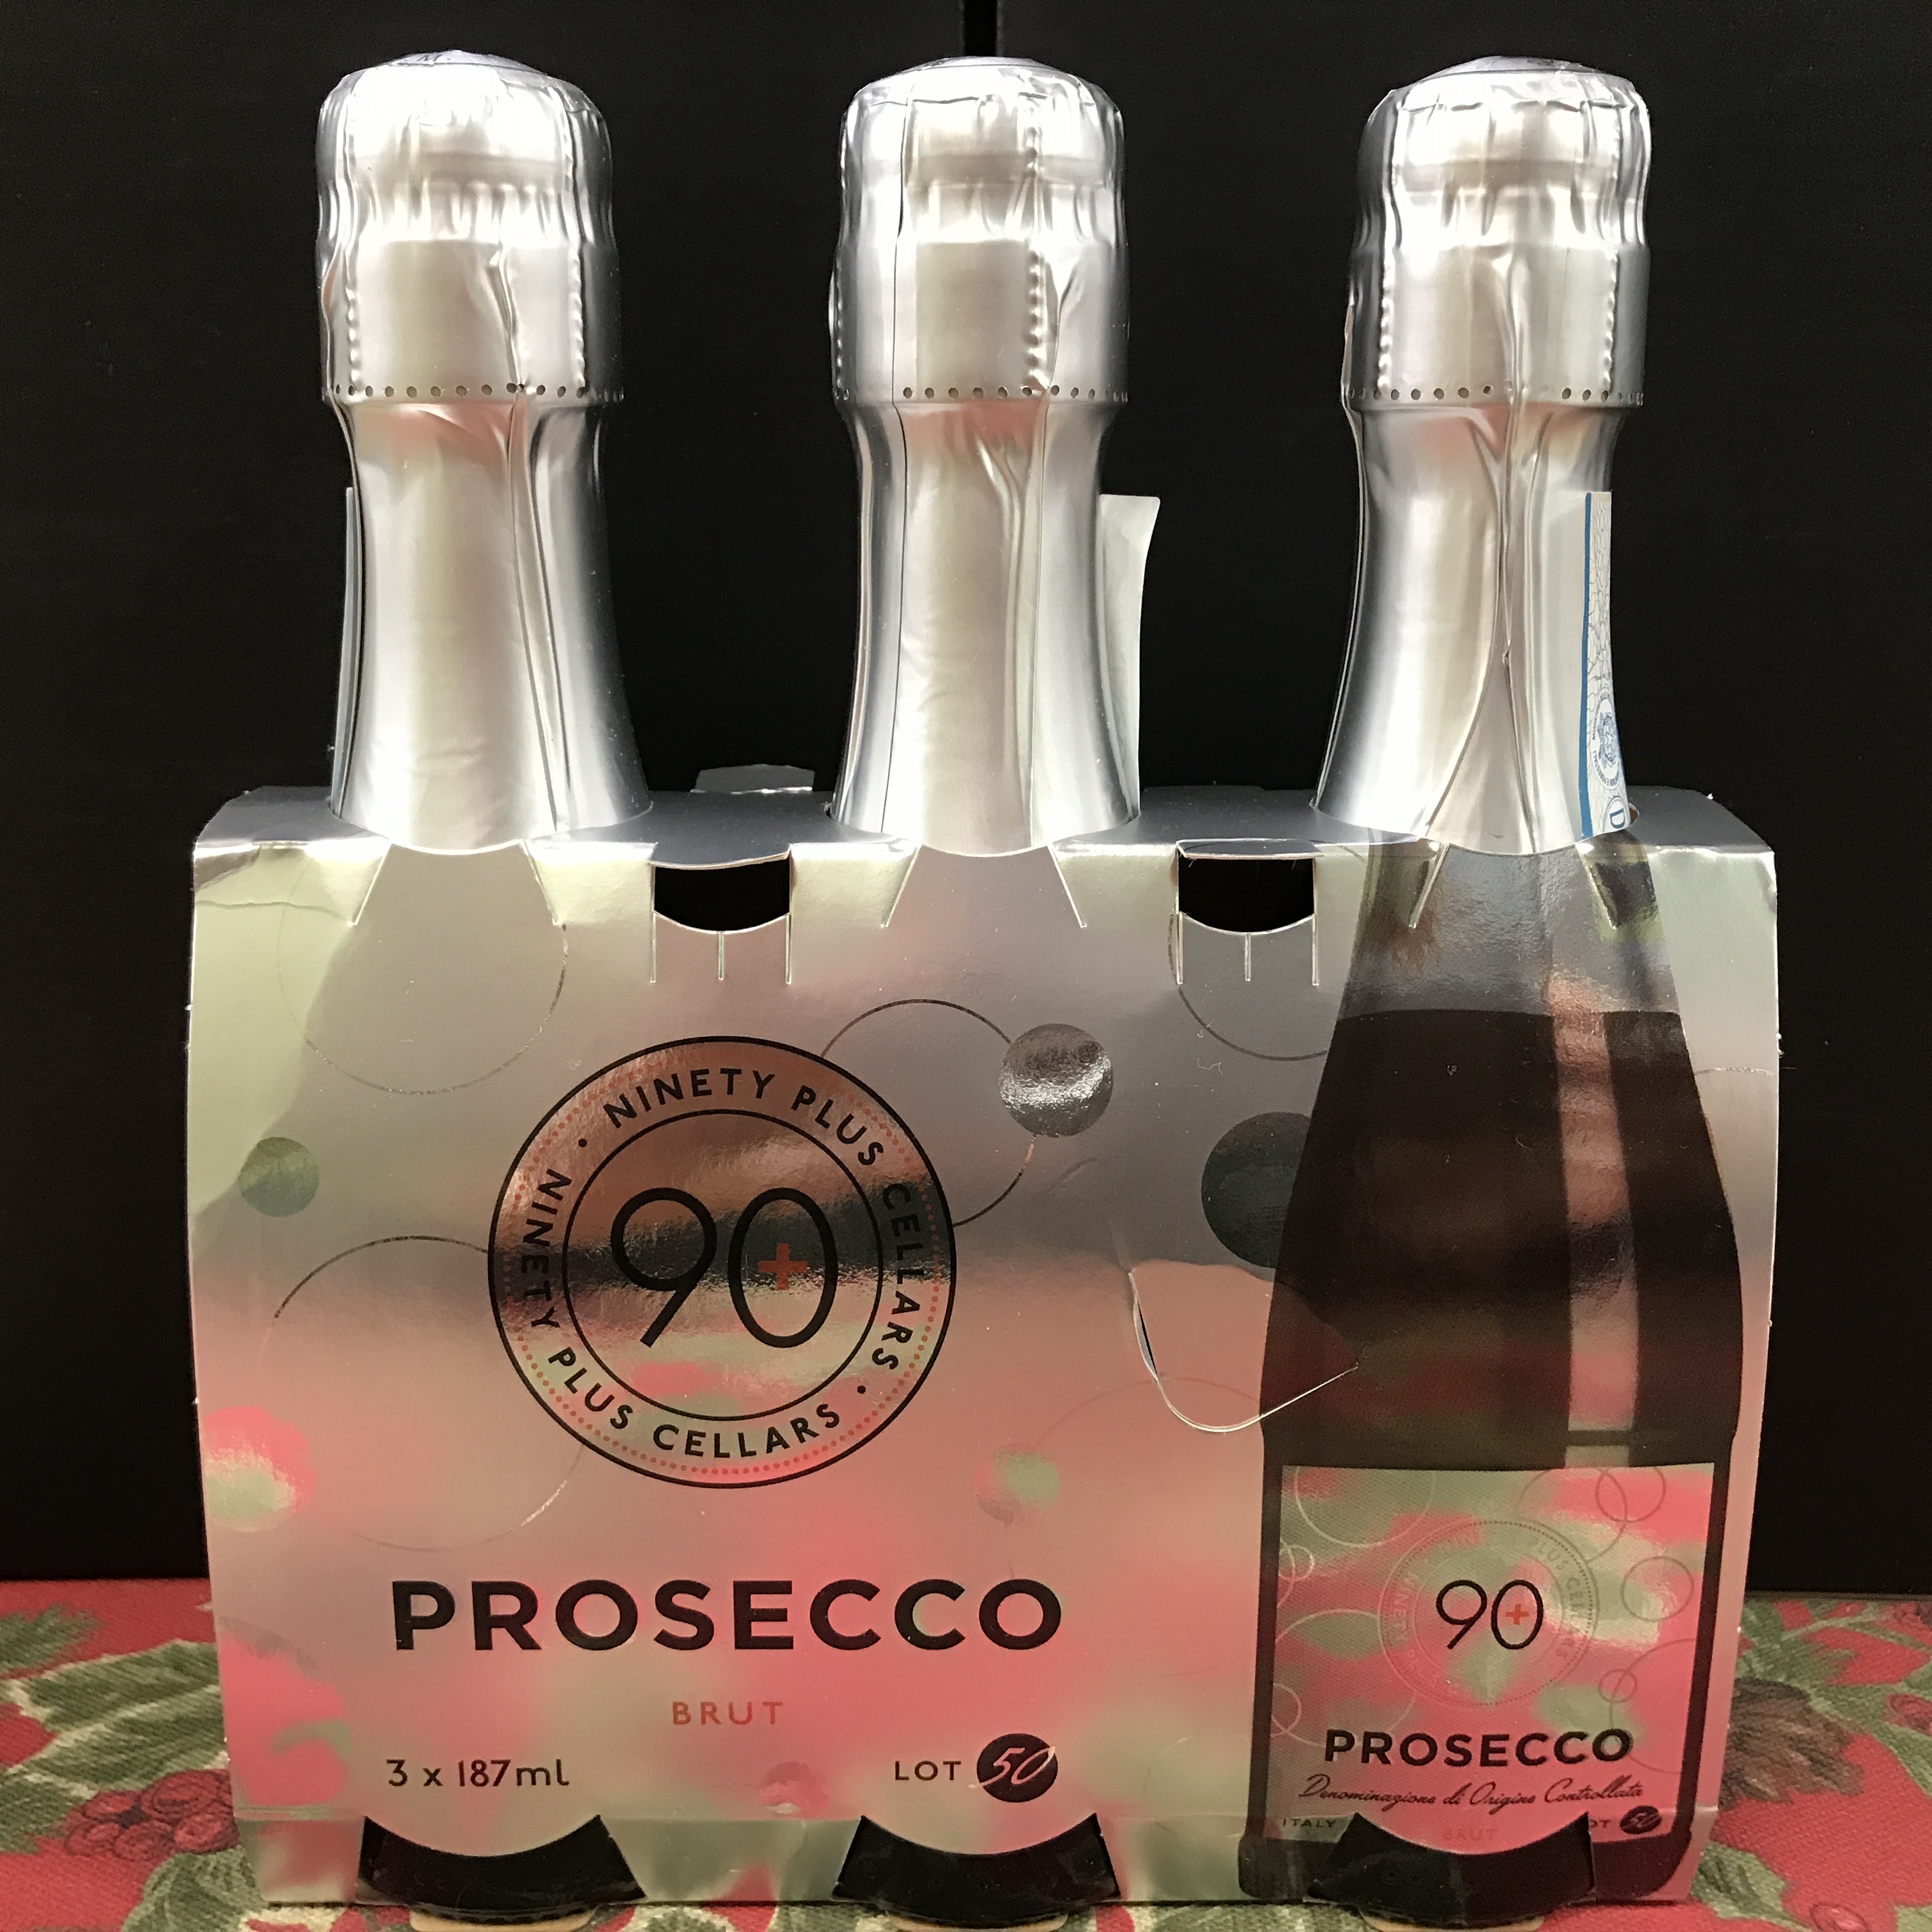 90+ Cellars Prosecco Brut small bottles 3 x 187 ml